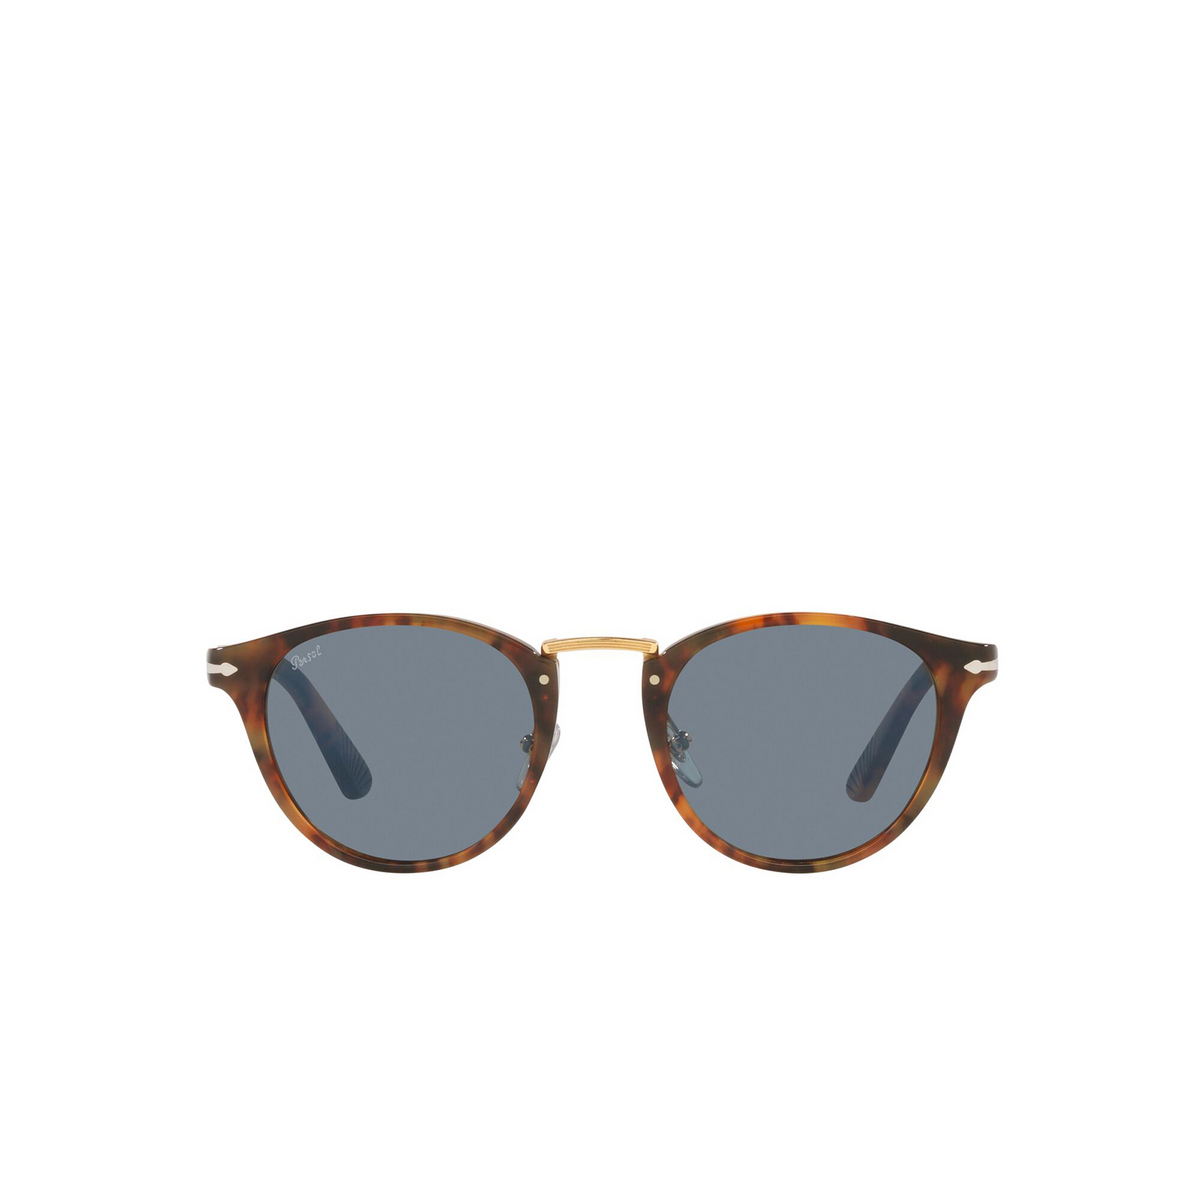 Persol® Round Sunglasses: PO3108S color Caffe 108/56 - front view.